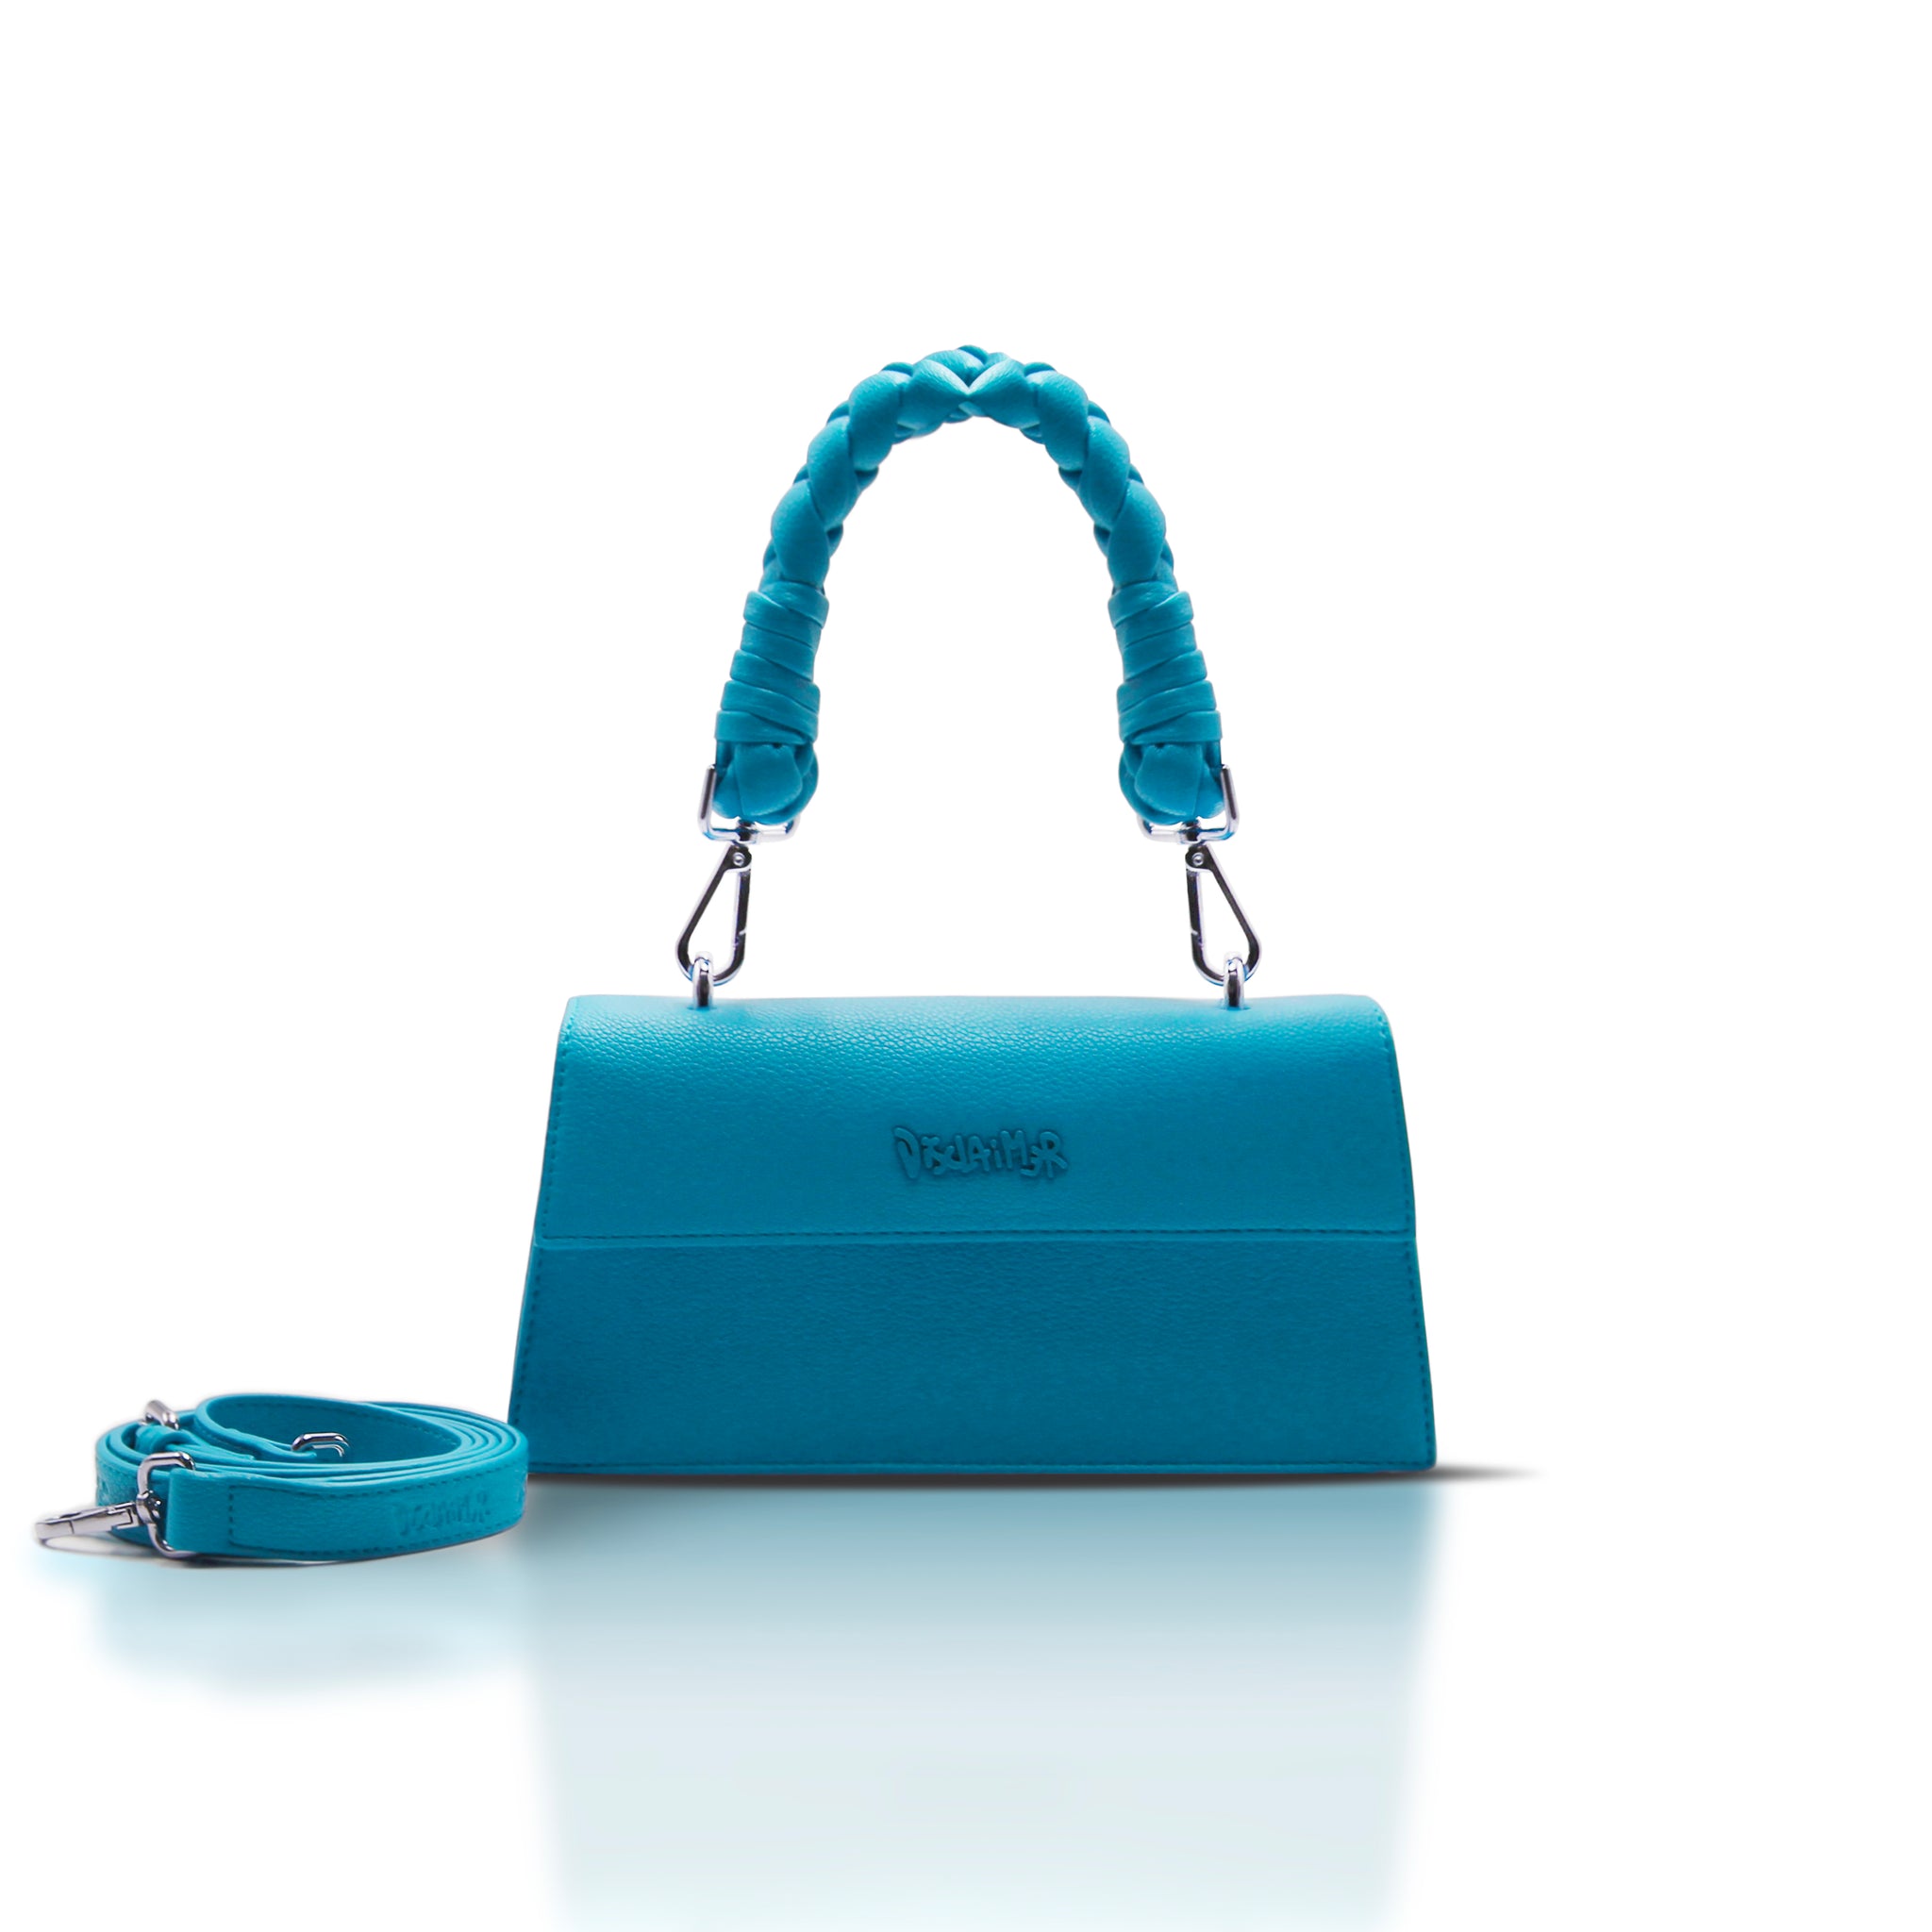 Turquoise mini bag